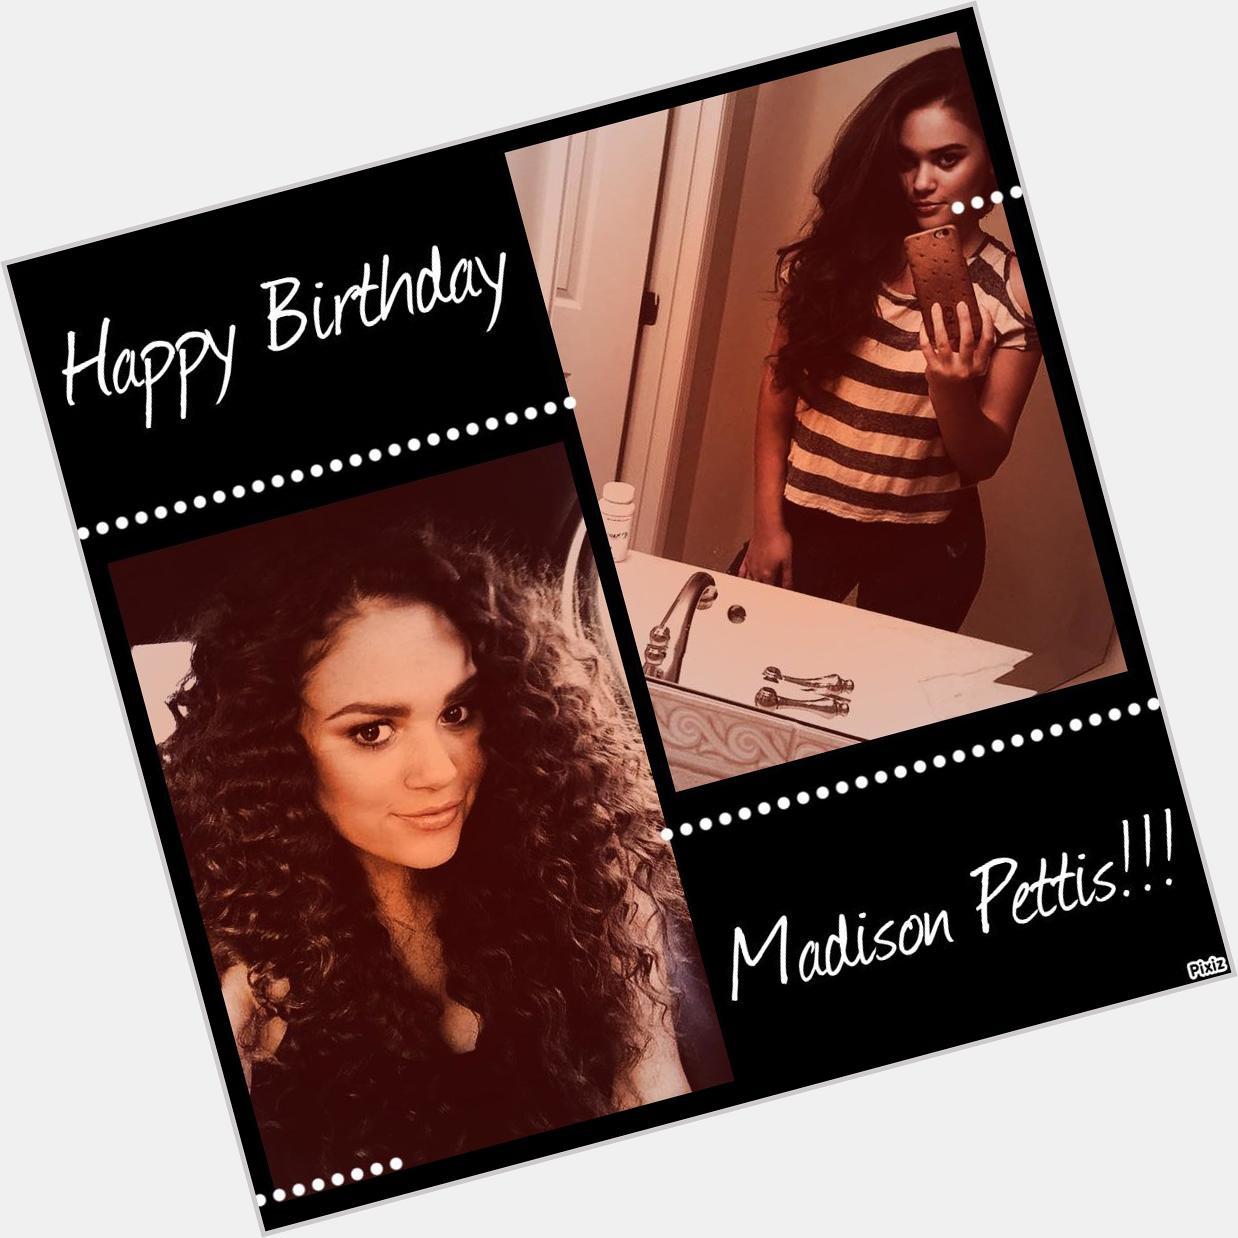  Happy Birthday Madison Pettis!!! 